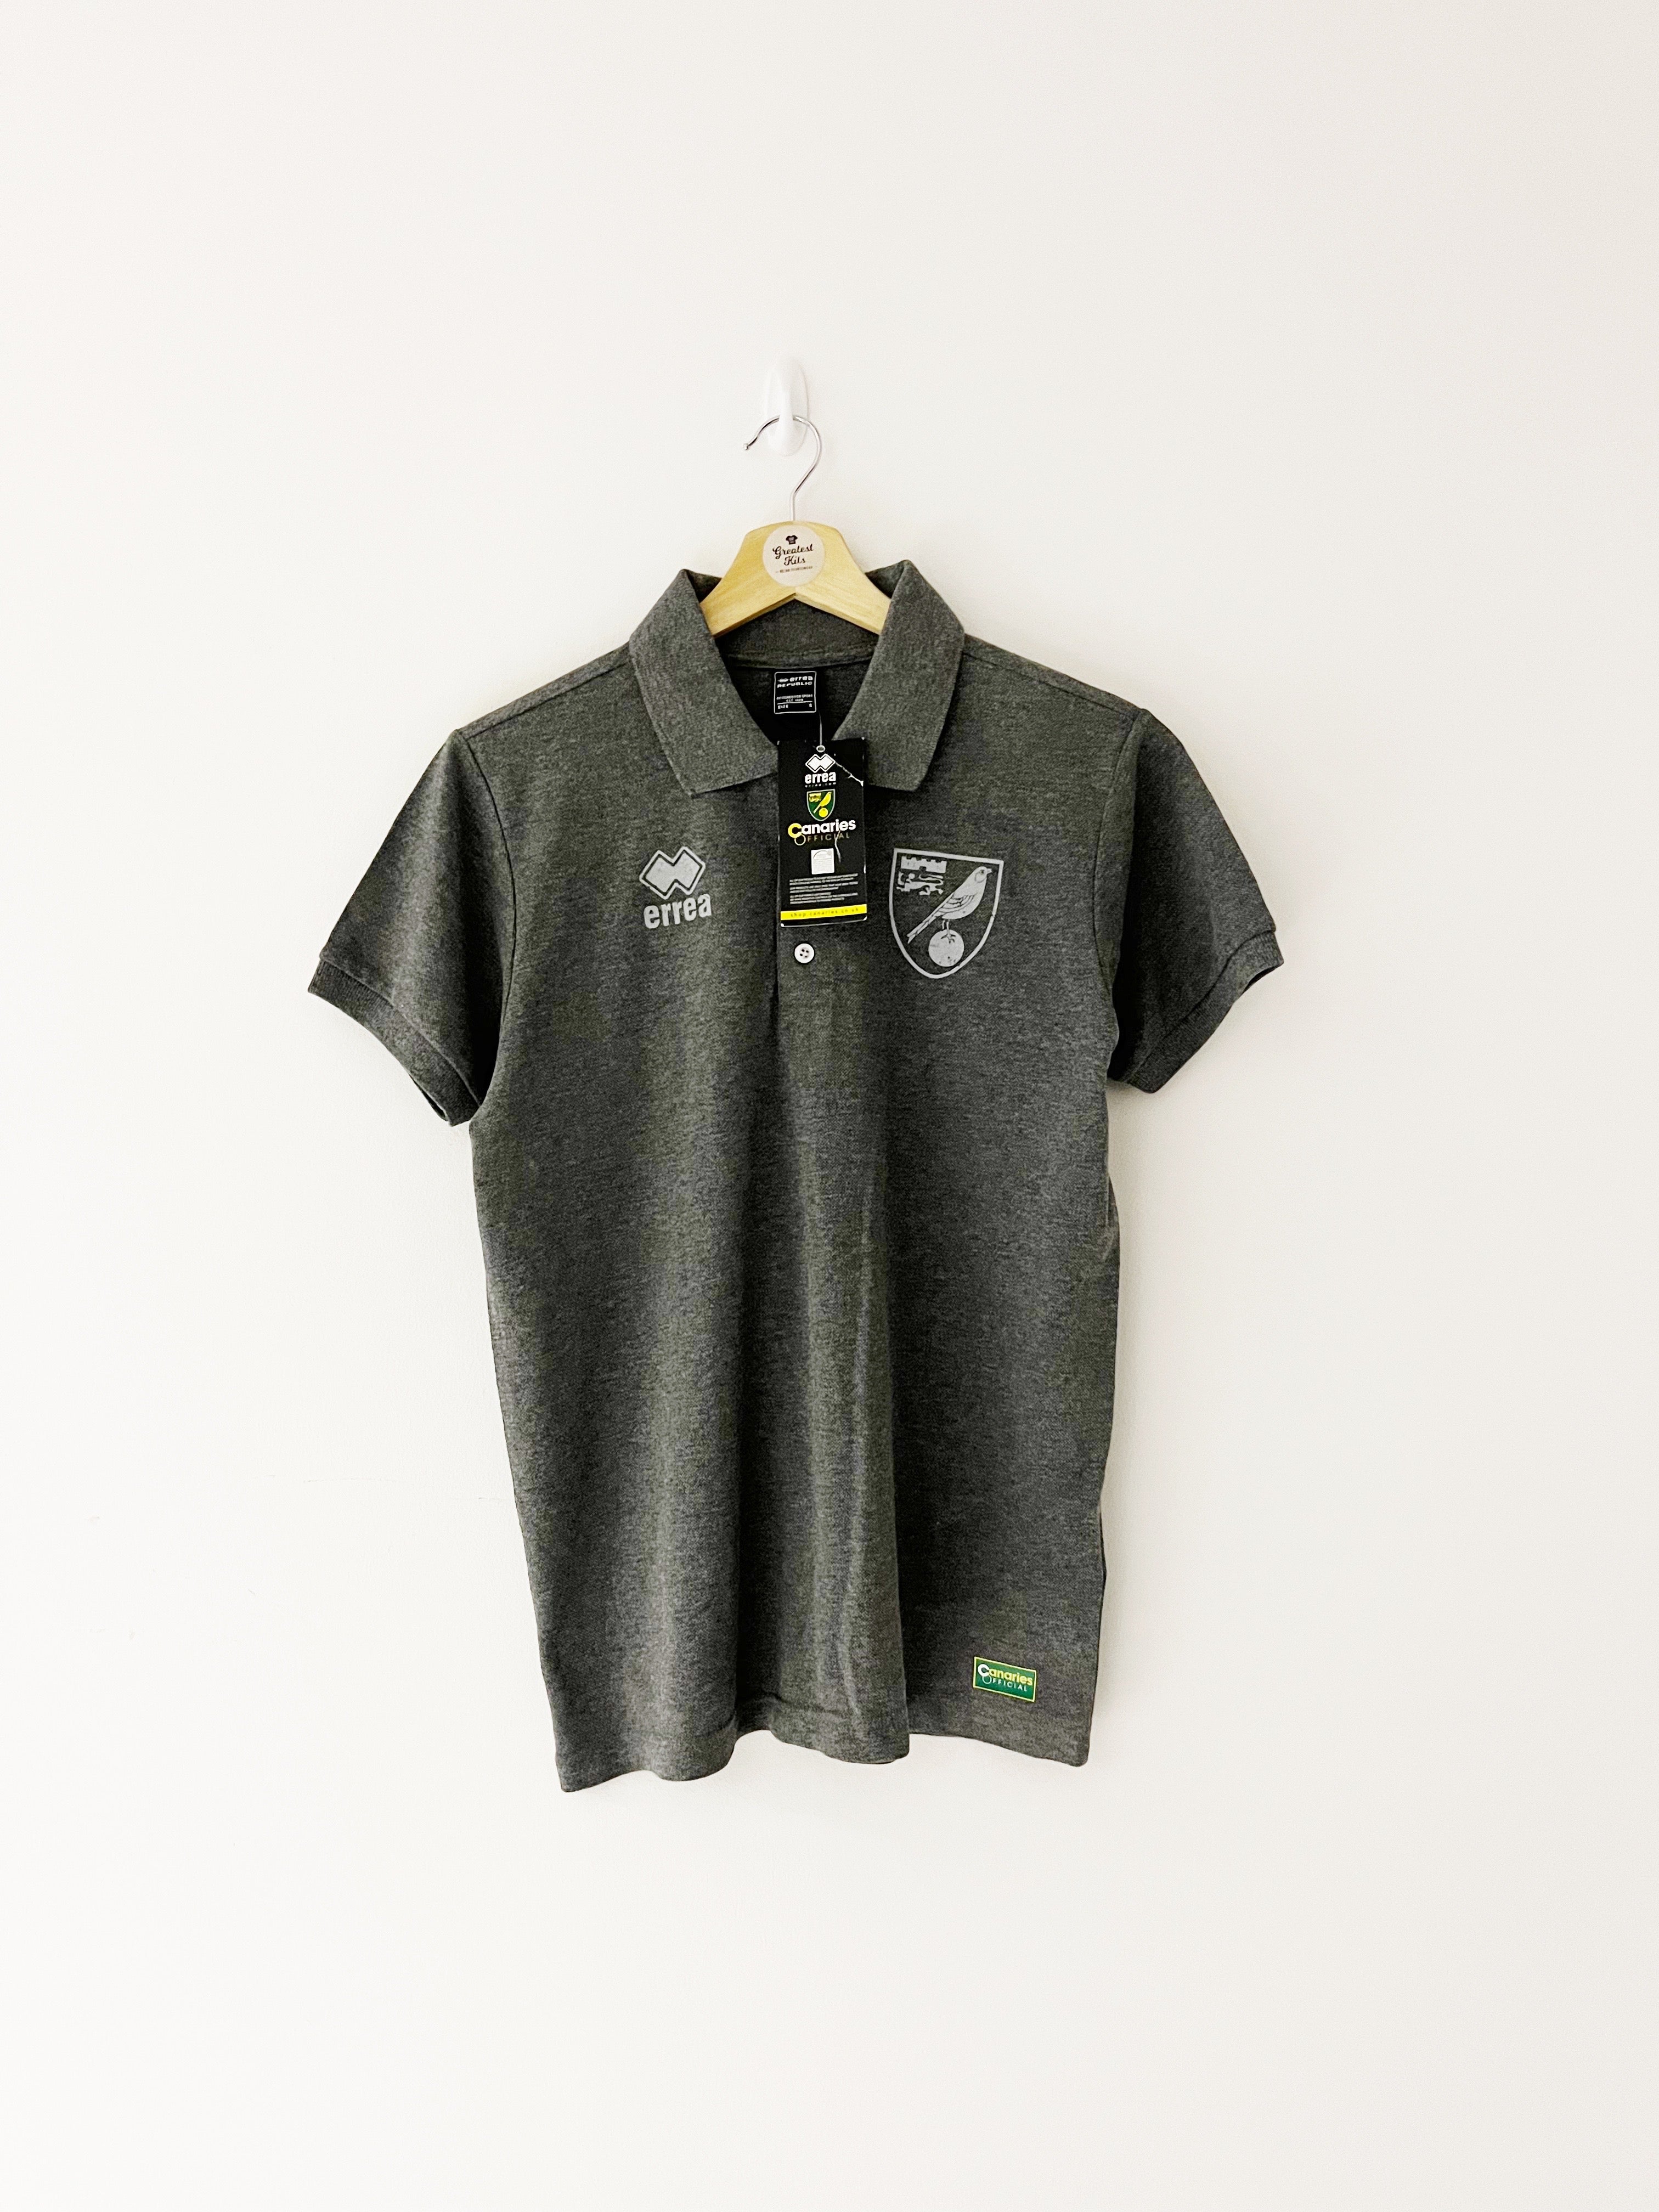 2020/21 Norwich City Polo Shirt (S) BNWT